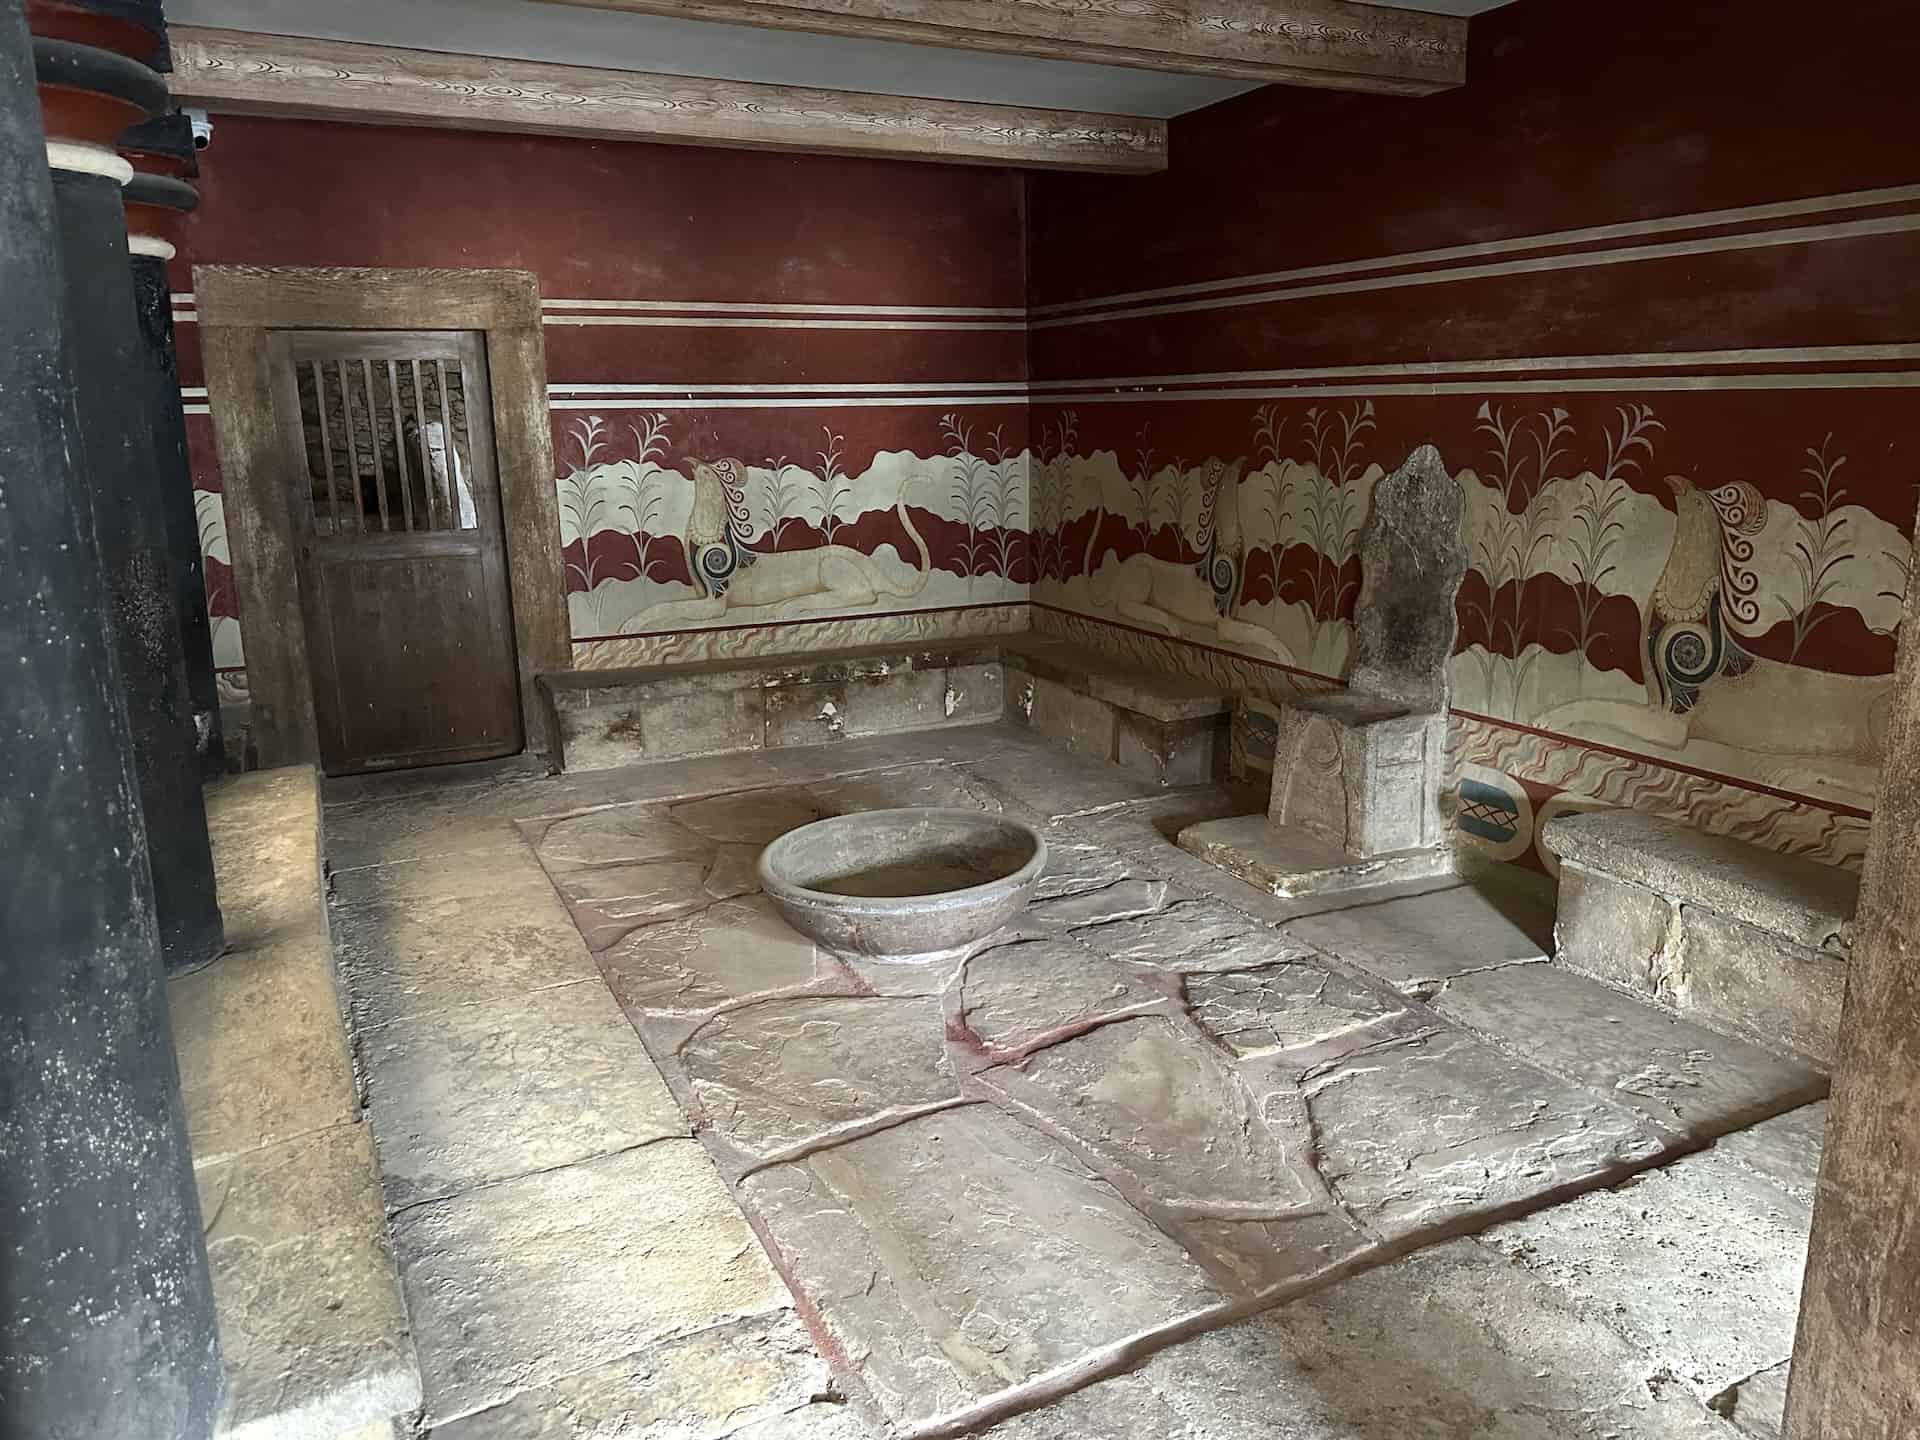 Main room of the Throne Room at Knossos, Crete, Greece